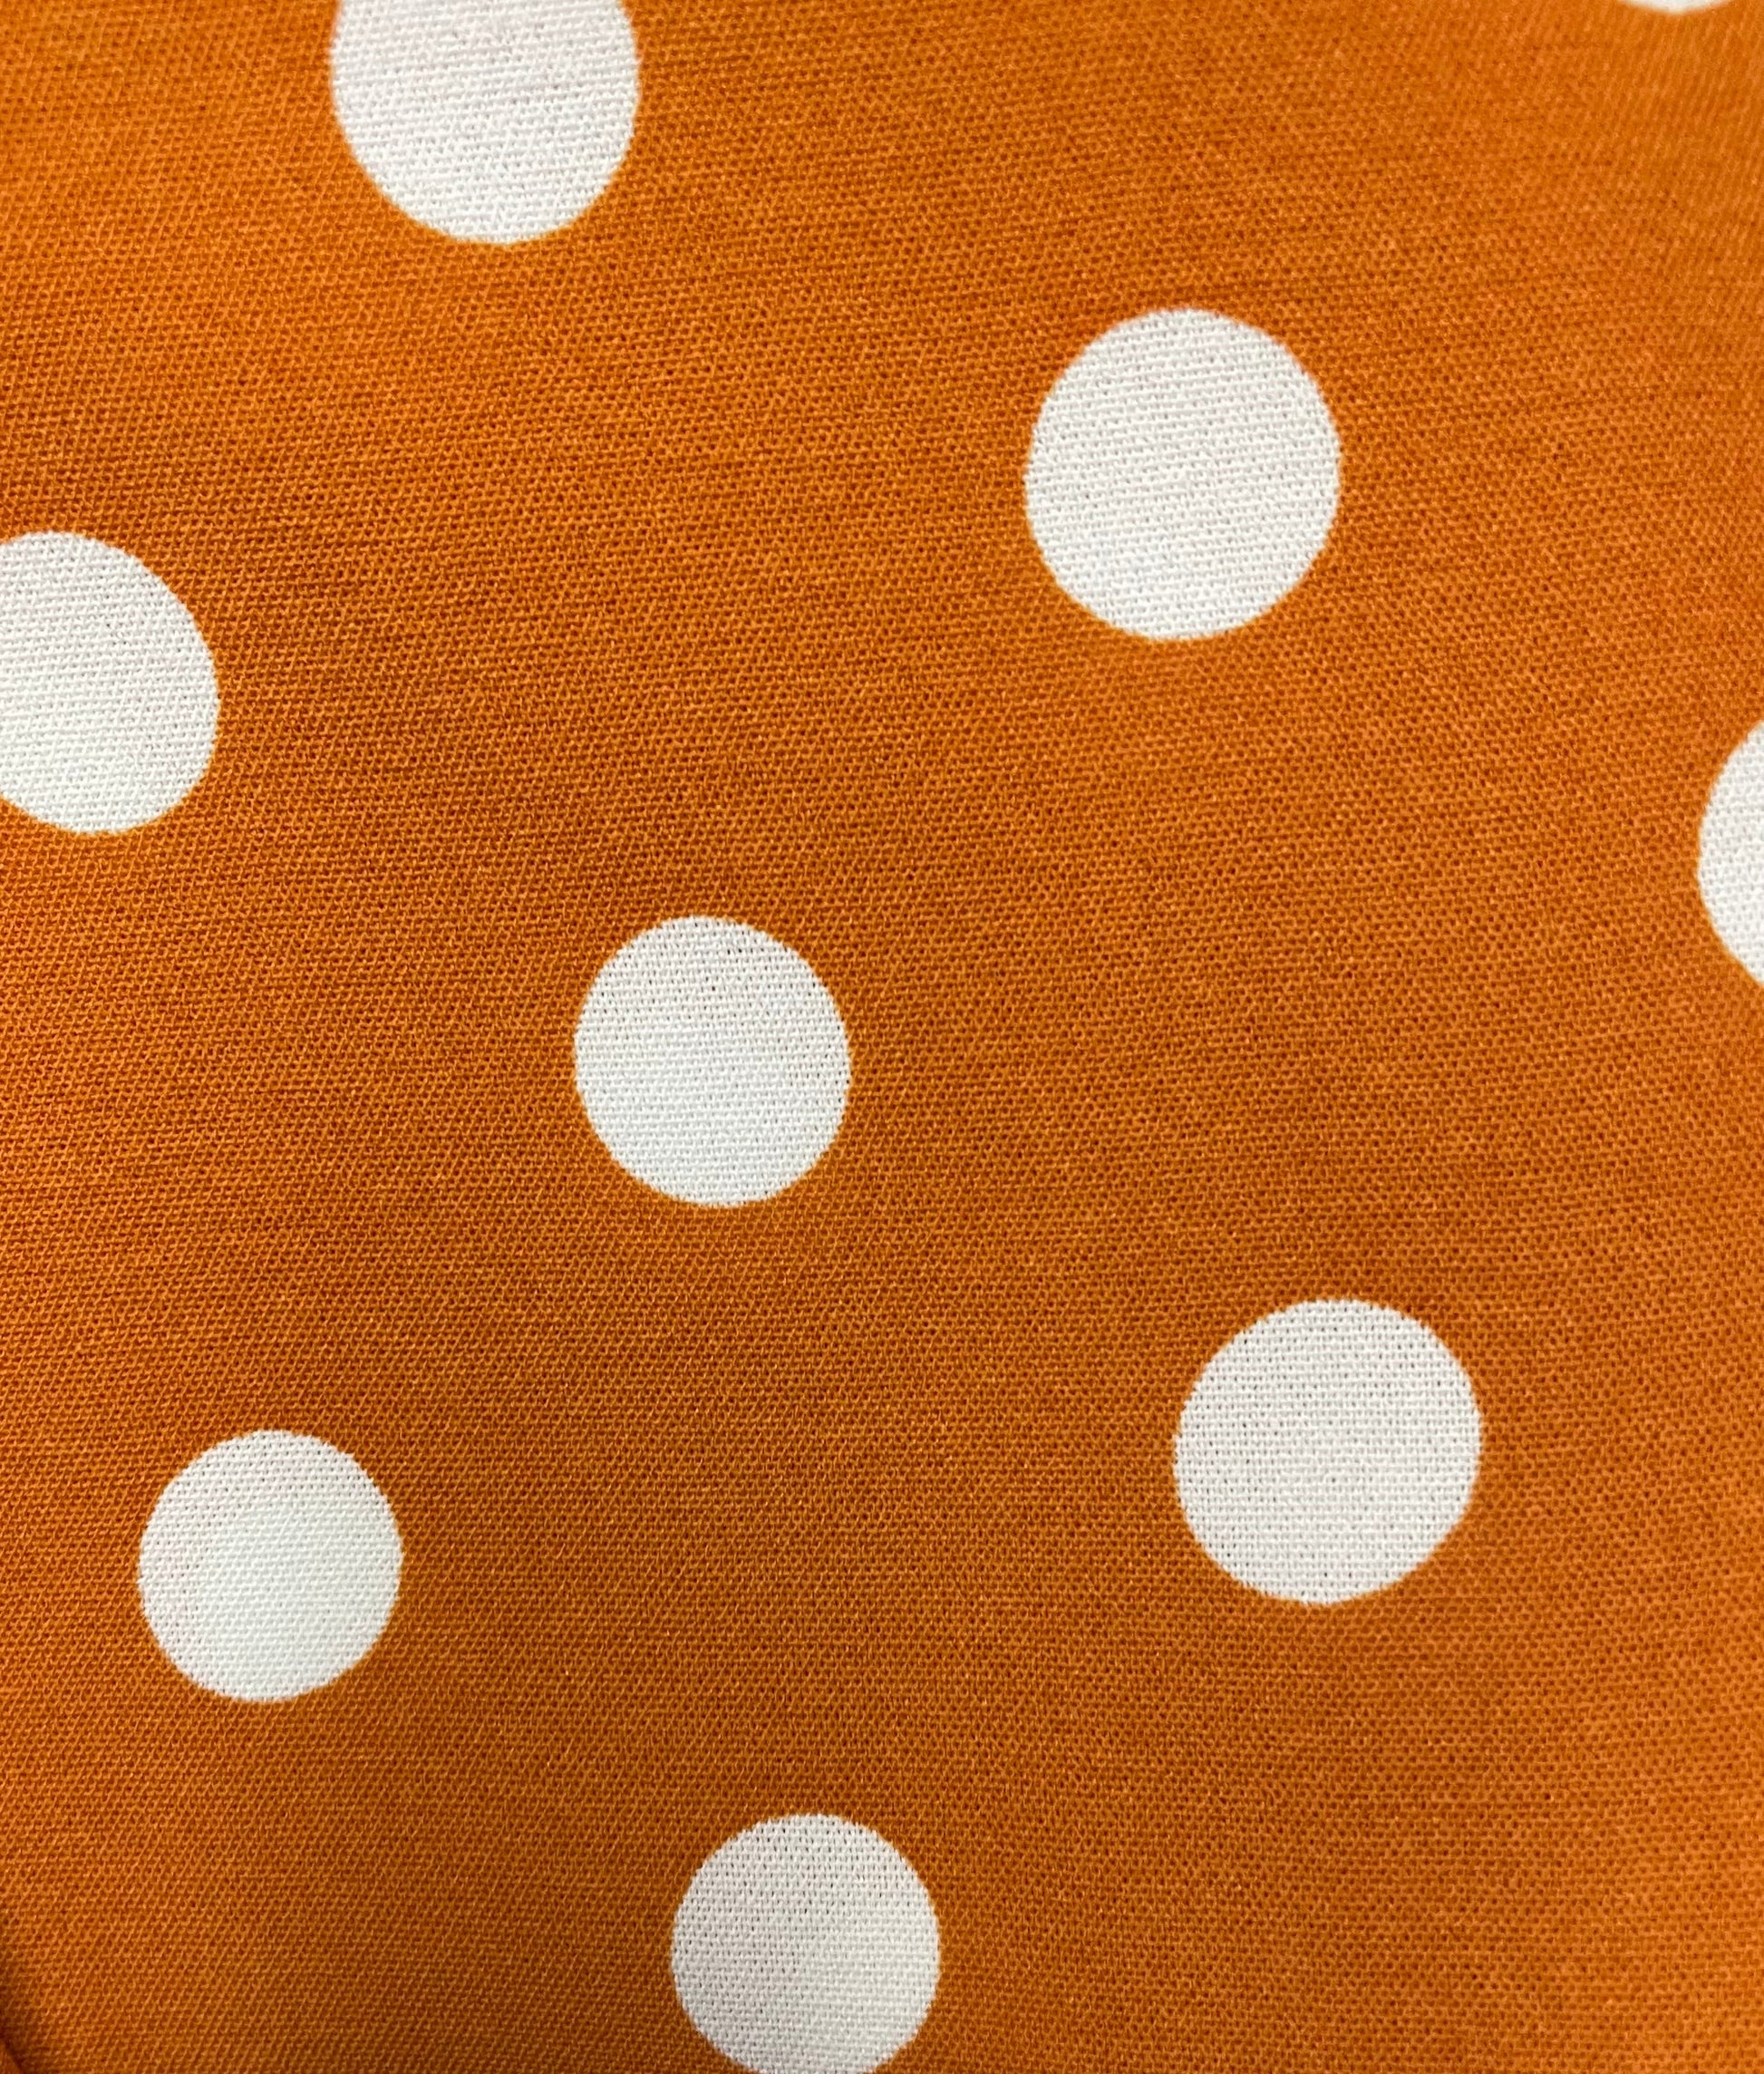 Mustard Polka Dot Dress - Premium  from Tooksie - Just $41.99! Shop now at Tooksie